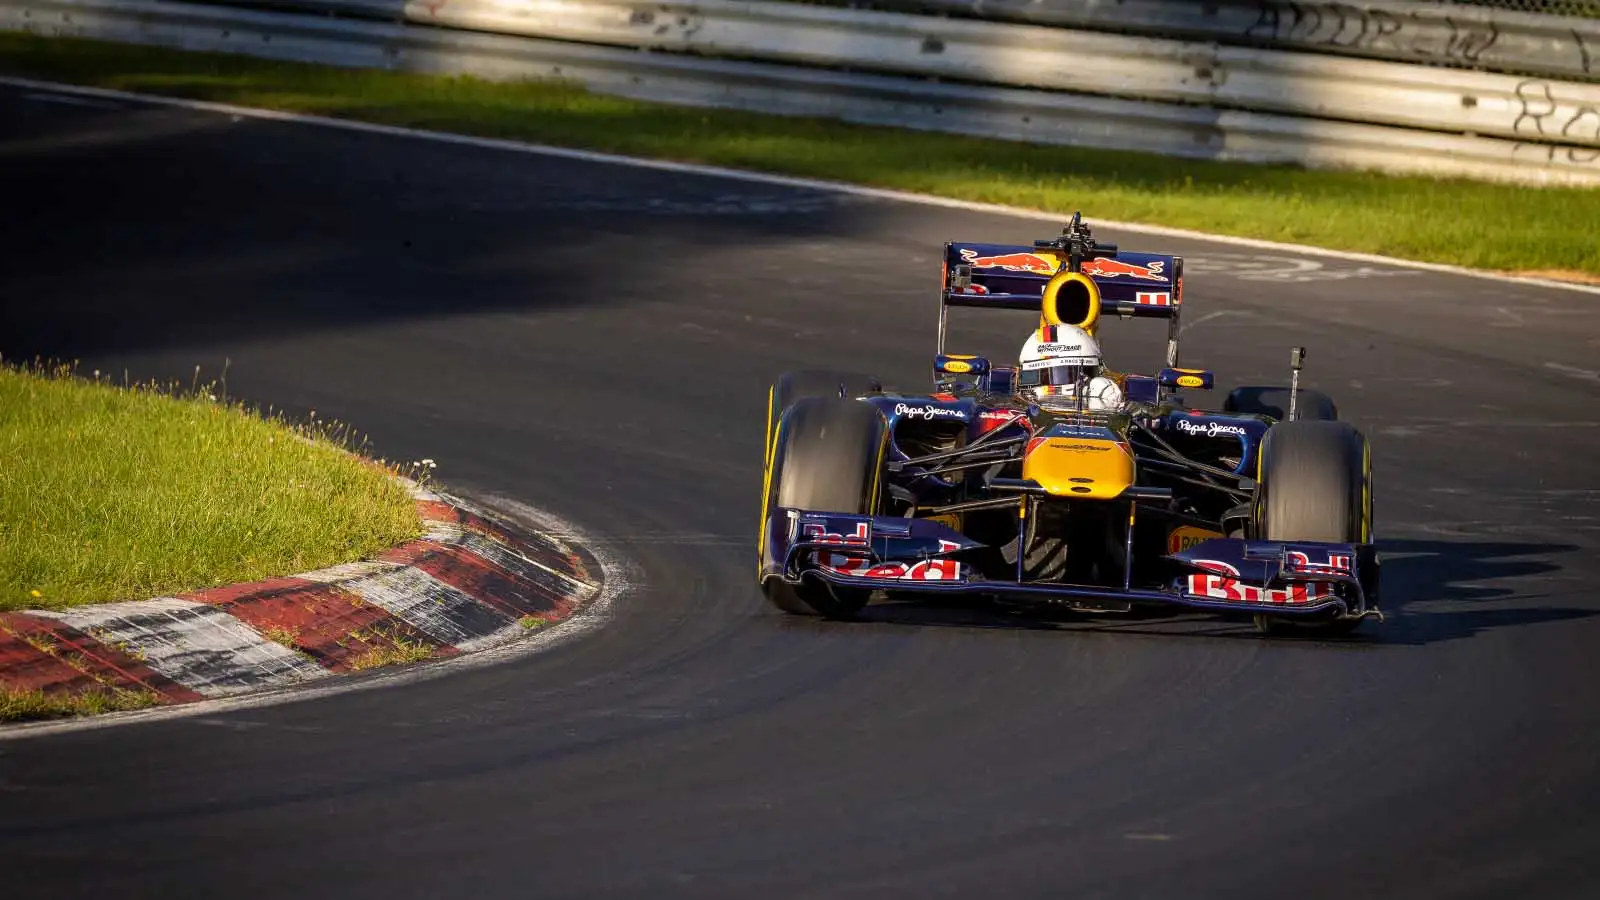 Sebastian Vettel Takes His Third Straight Formula One Title - The